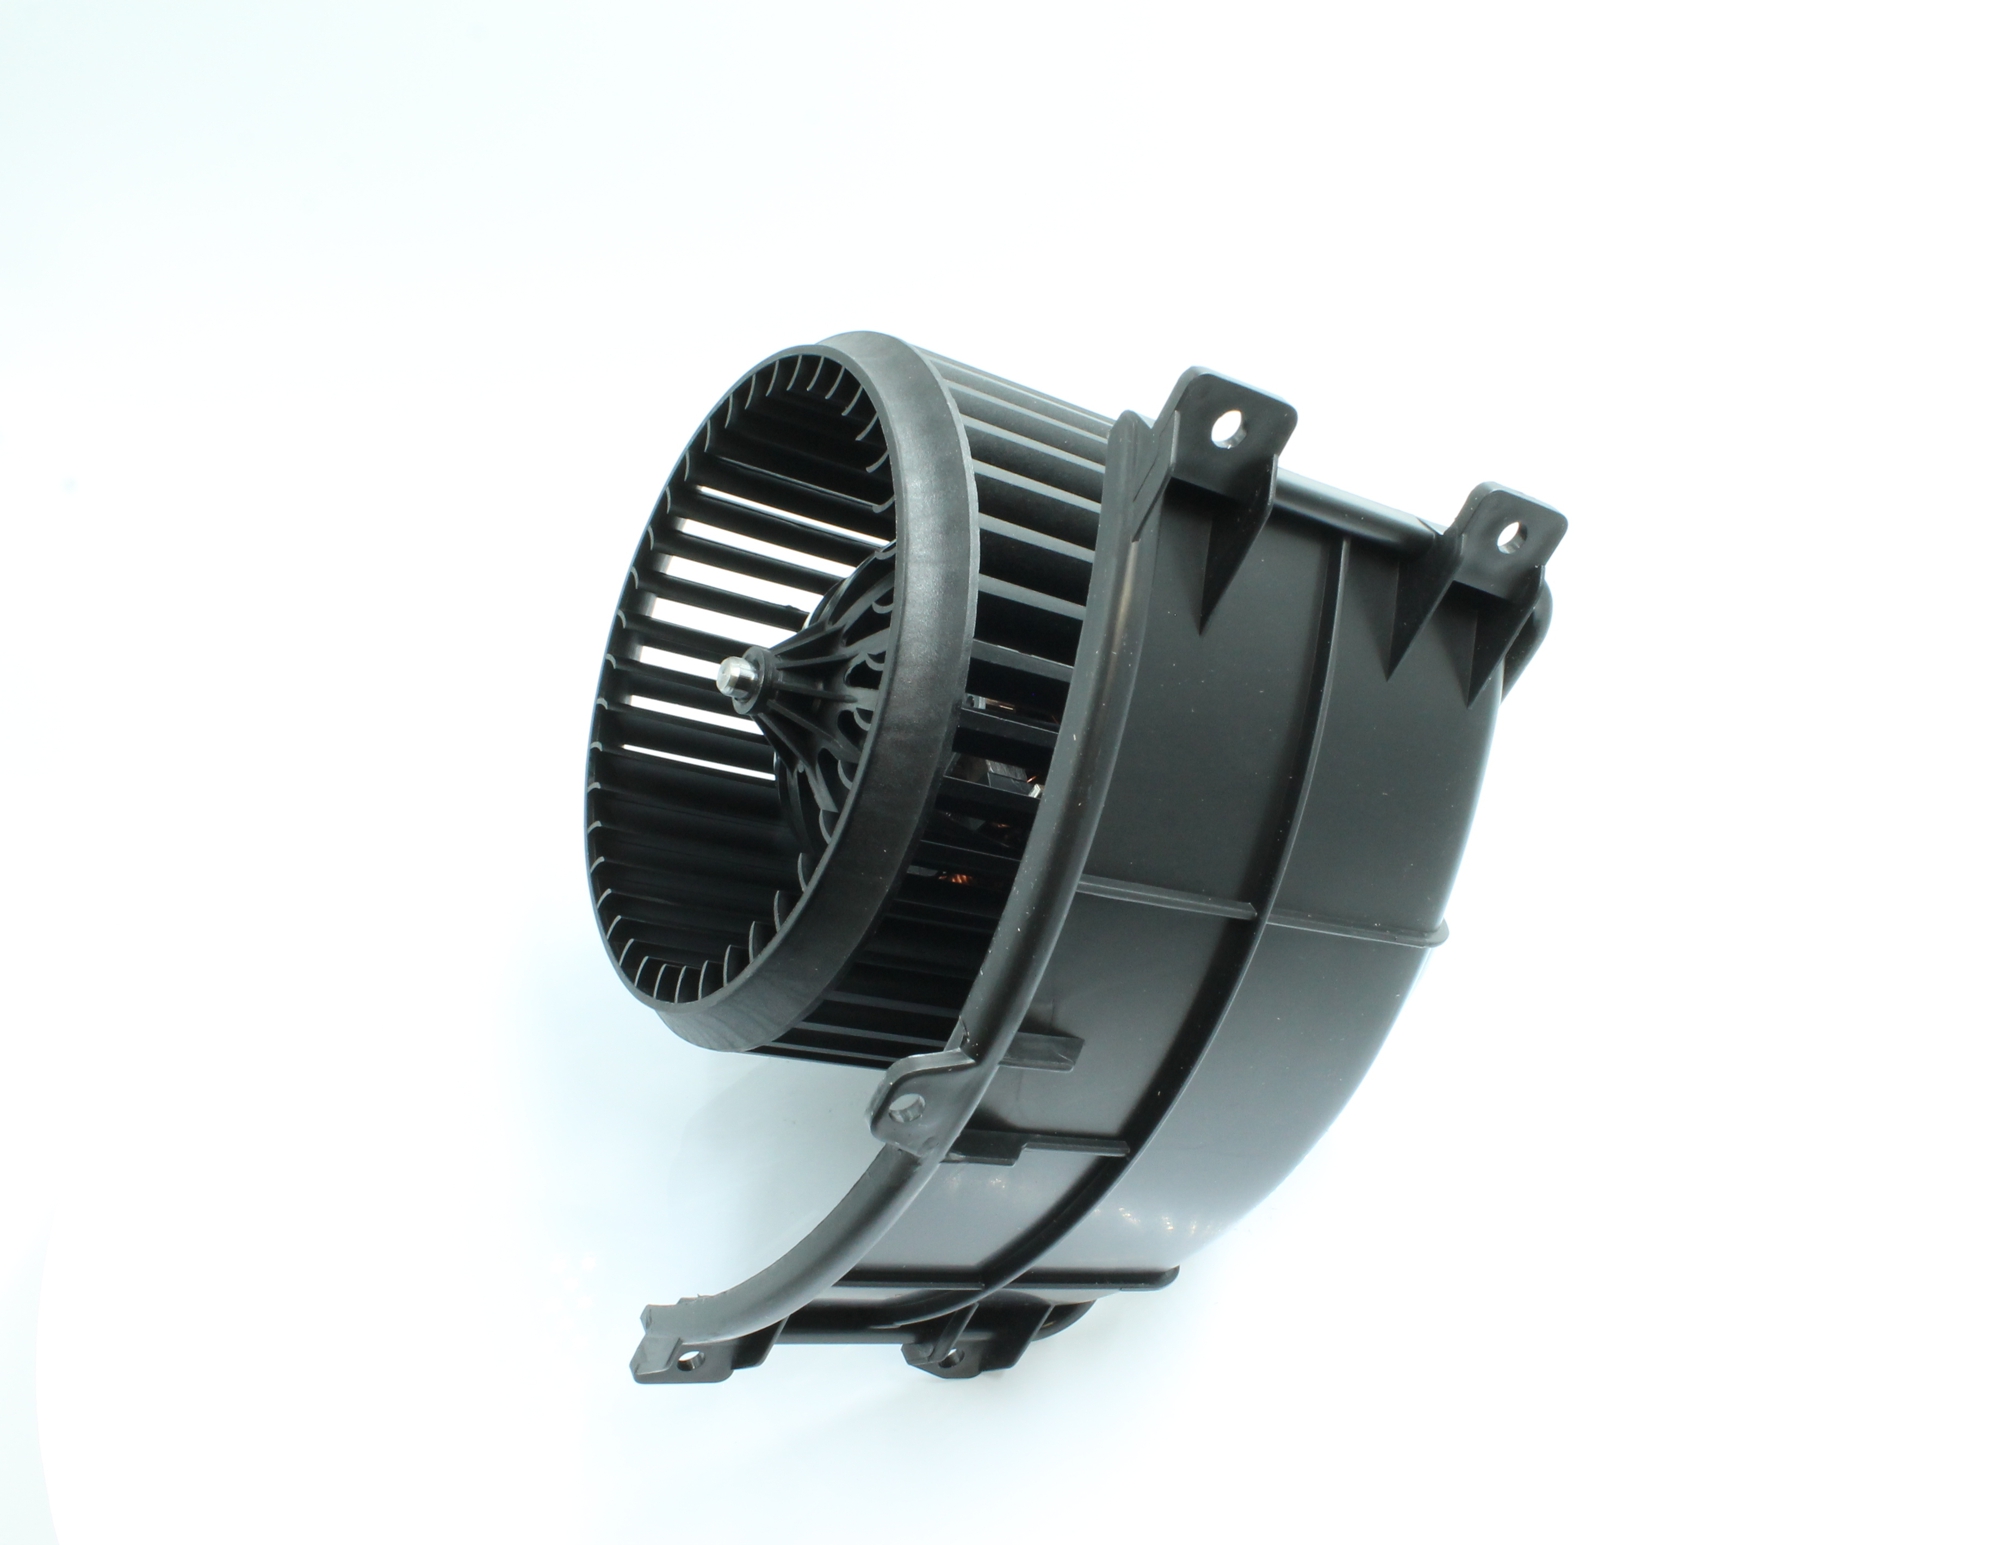 Original 7200033 PowerMax Blower motor experience and price